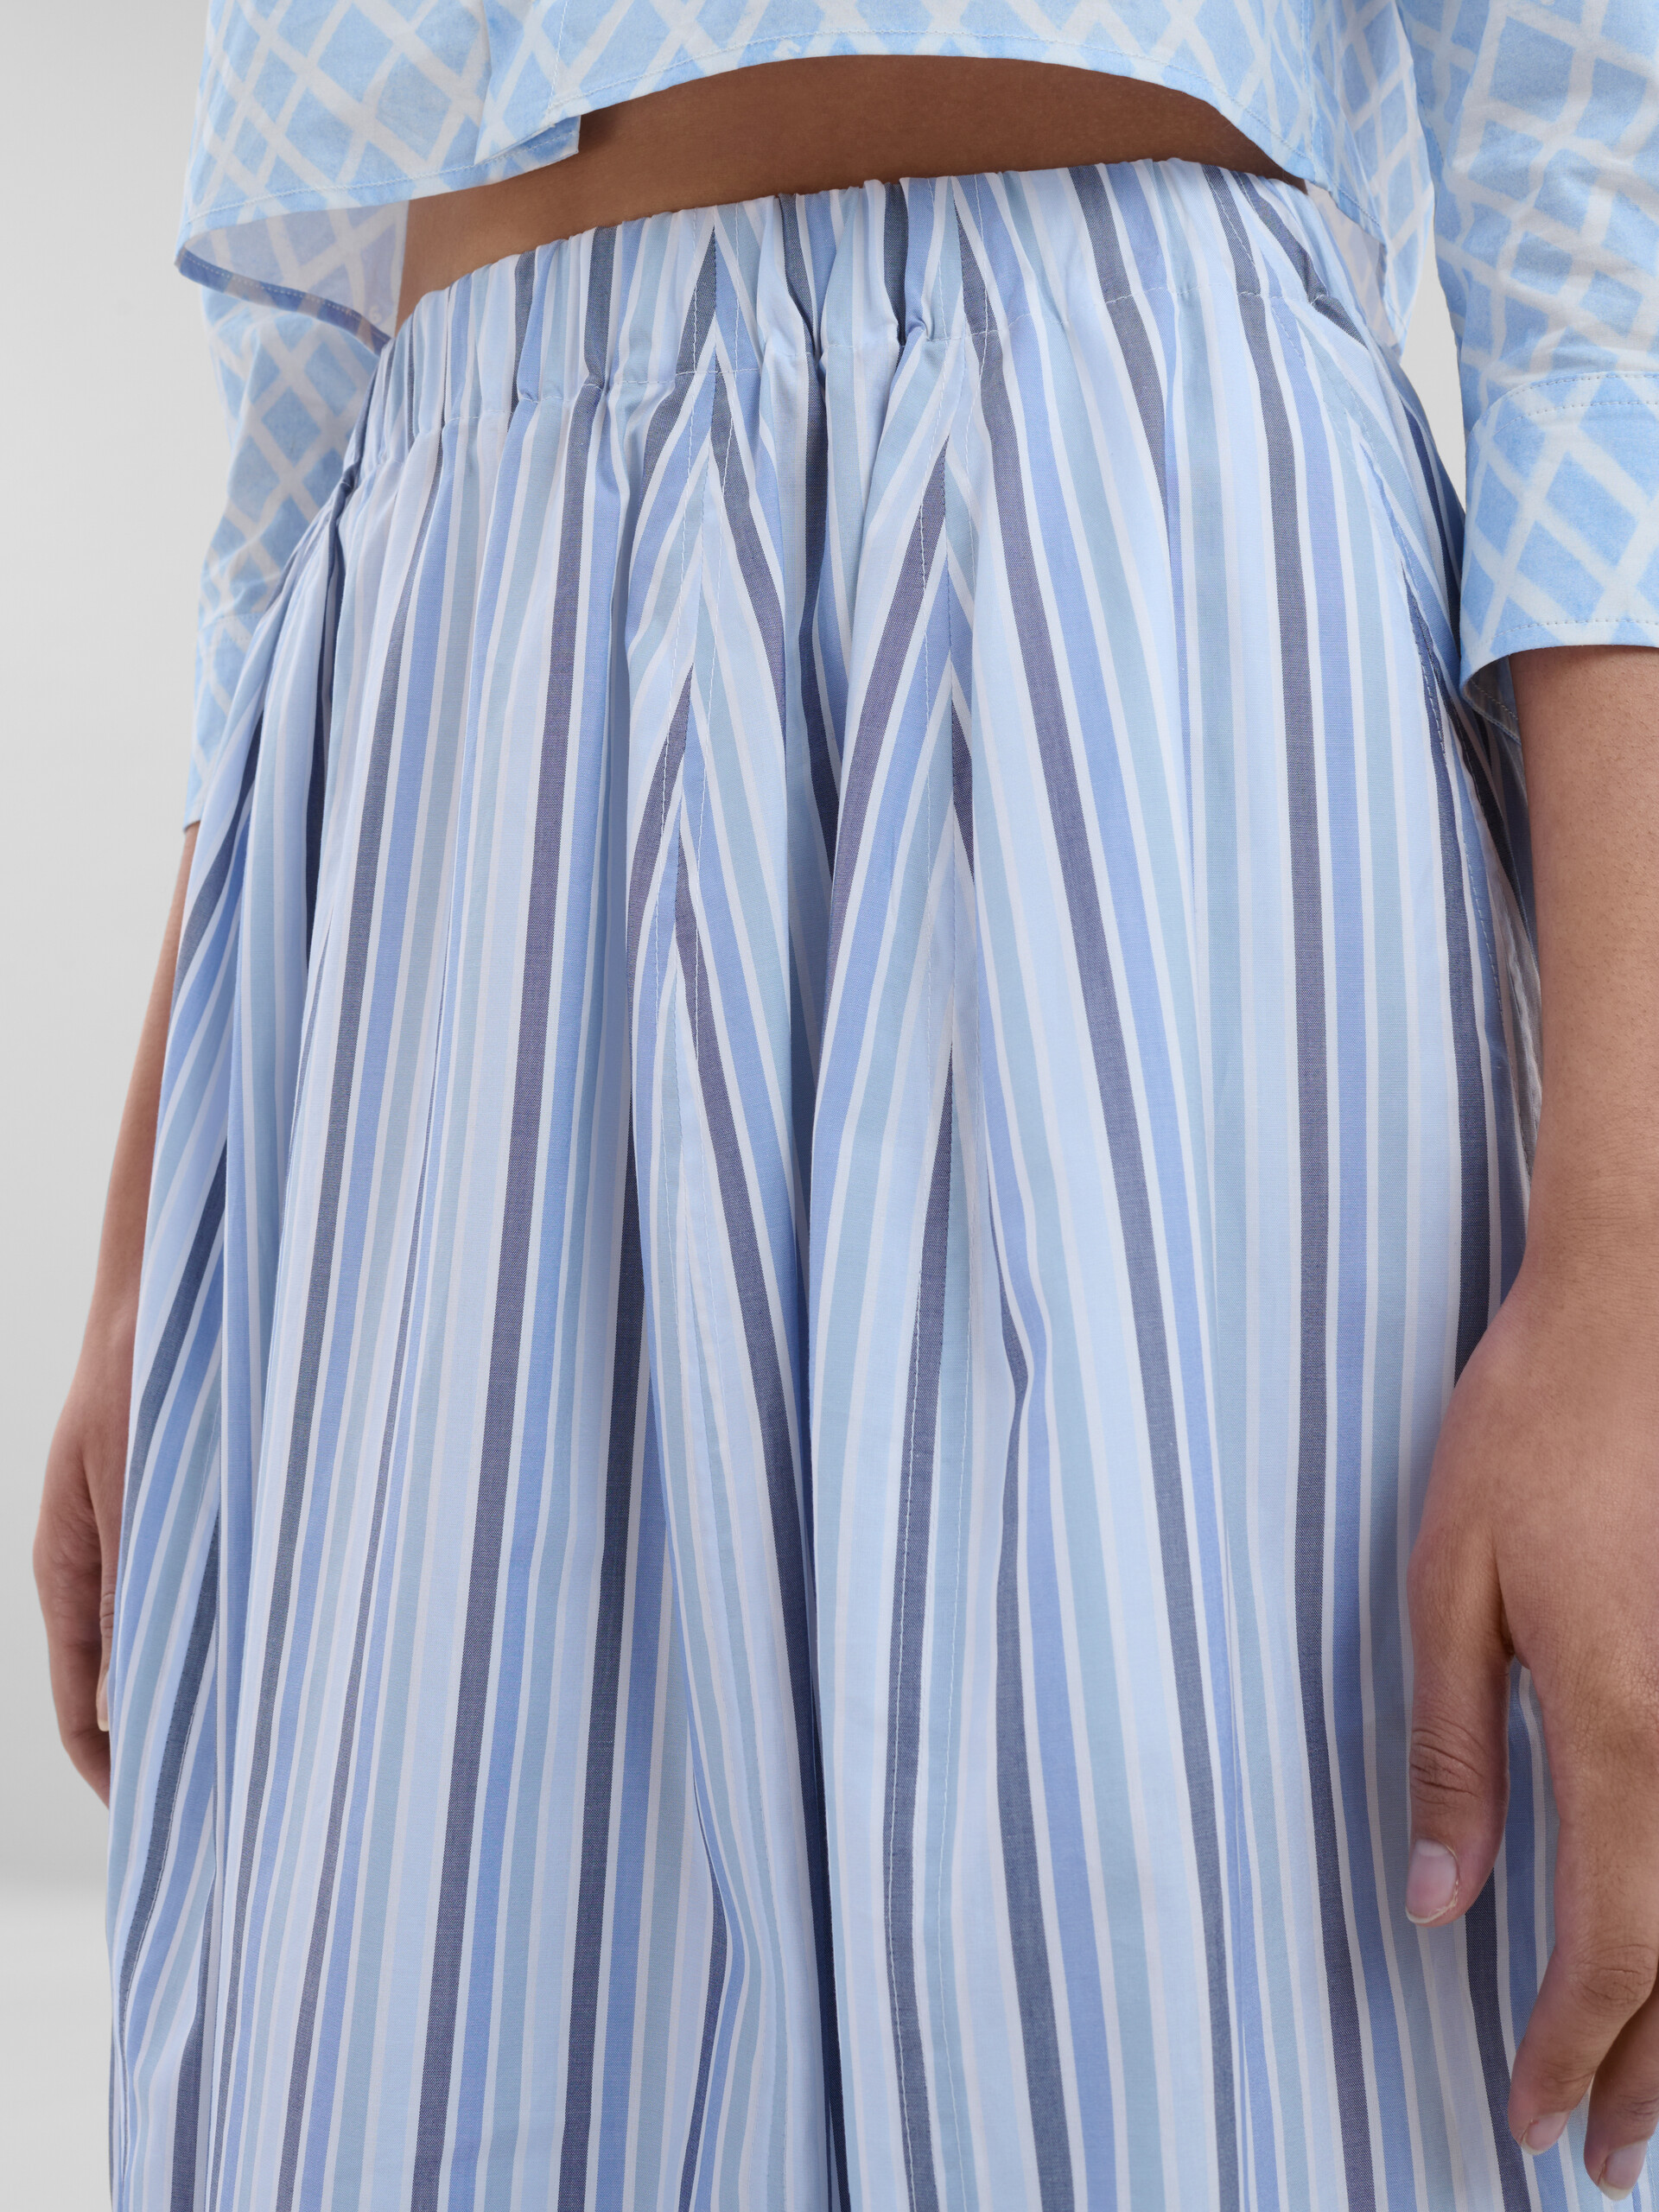 Falda midi elástica azul de popelina orgánica a rayas - Faldas - Image 4